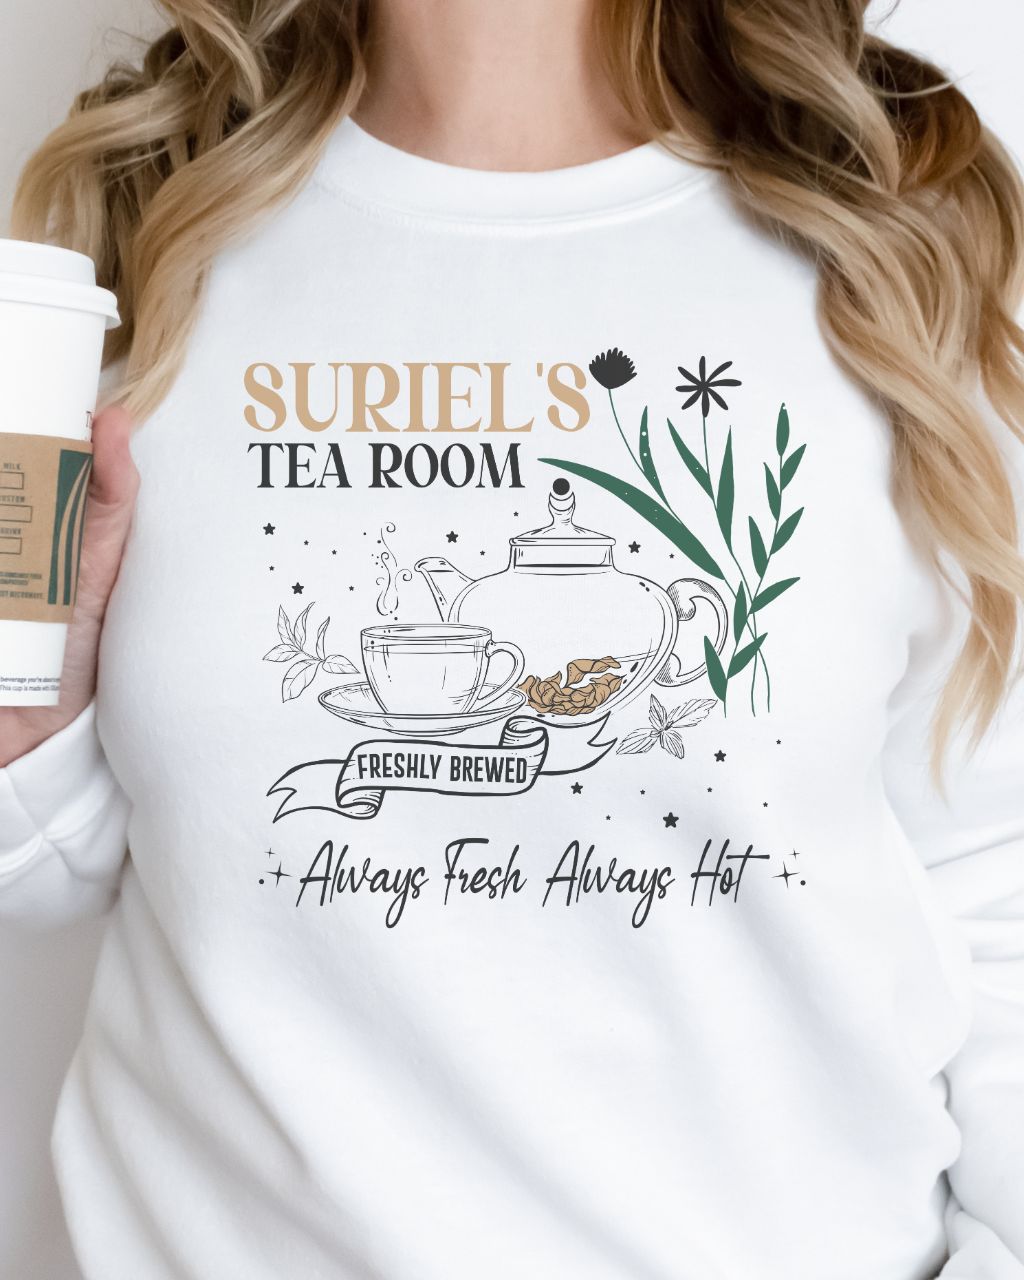 Suriel's Tea Room Sweatshirt - ACOTAR Velaris Sarah J. Maas Inspired Sweater